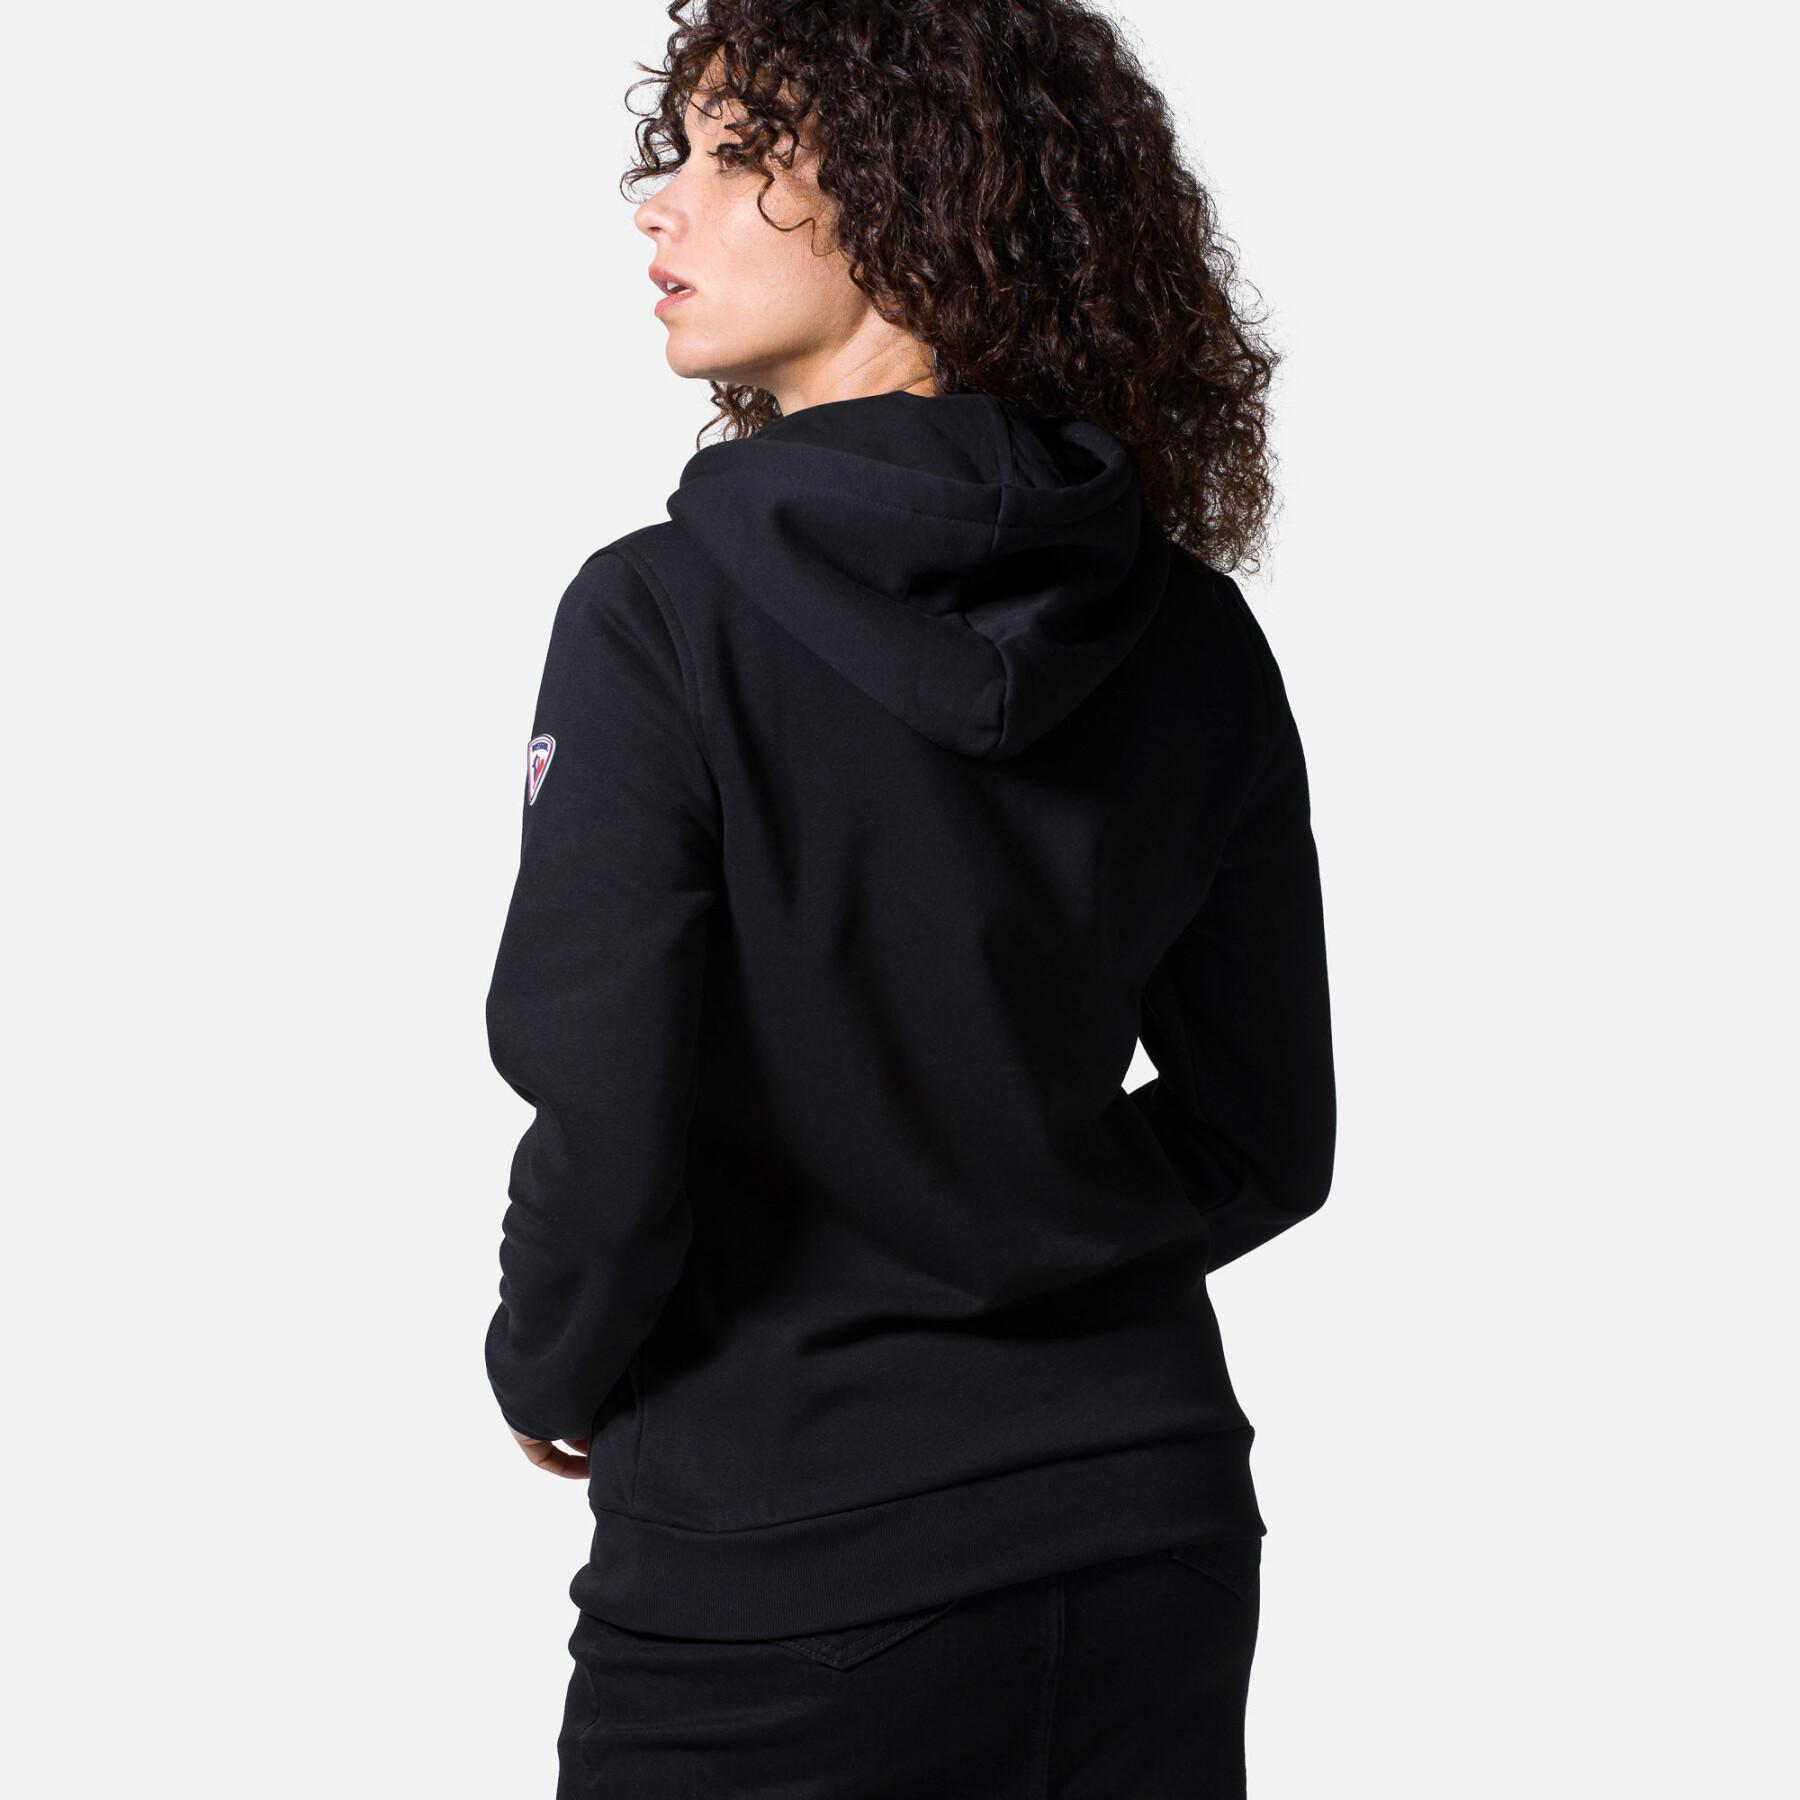 Sweatshirt à capuche femme Rossignol Logo